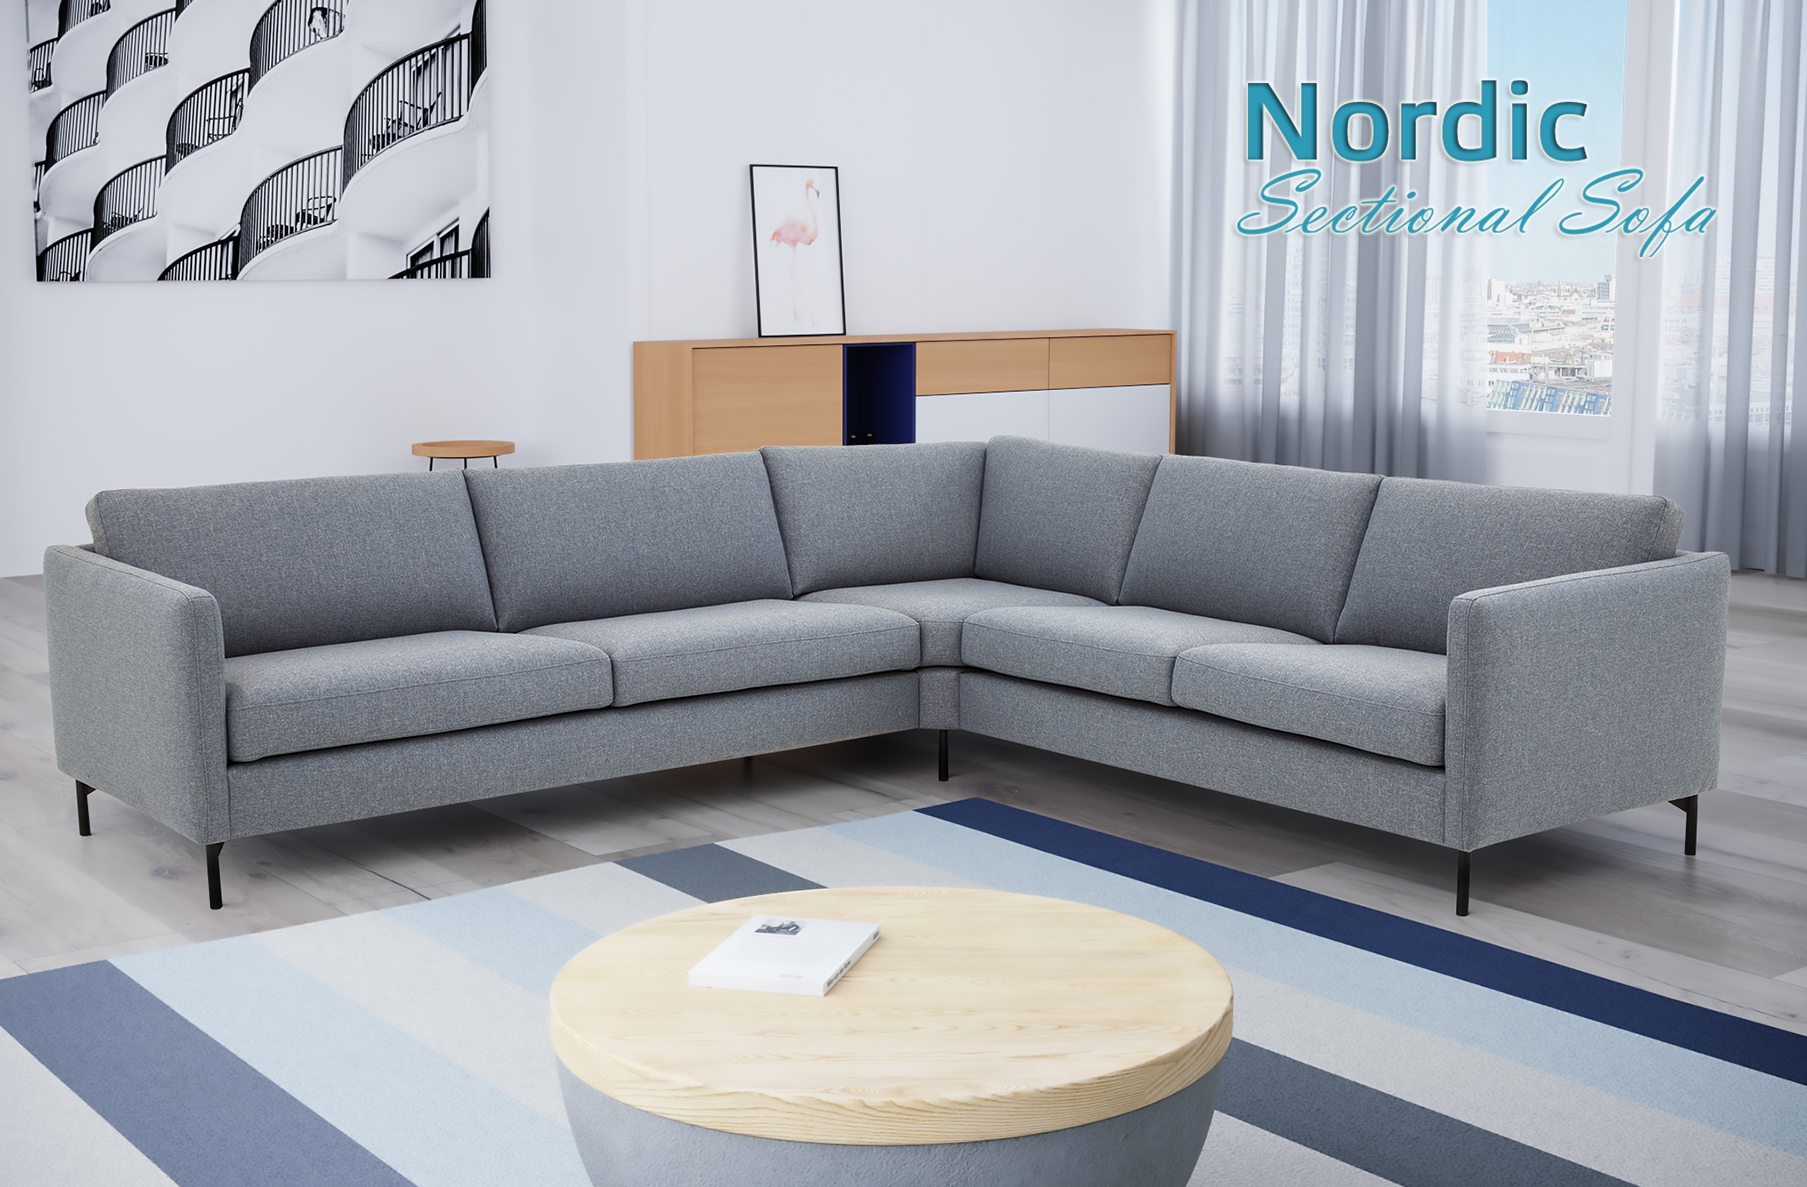 Nordic Sectional Sofa, Cheap